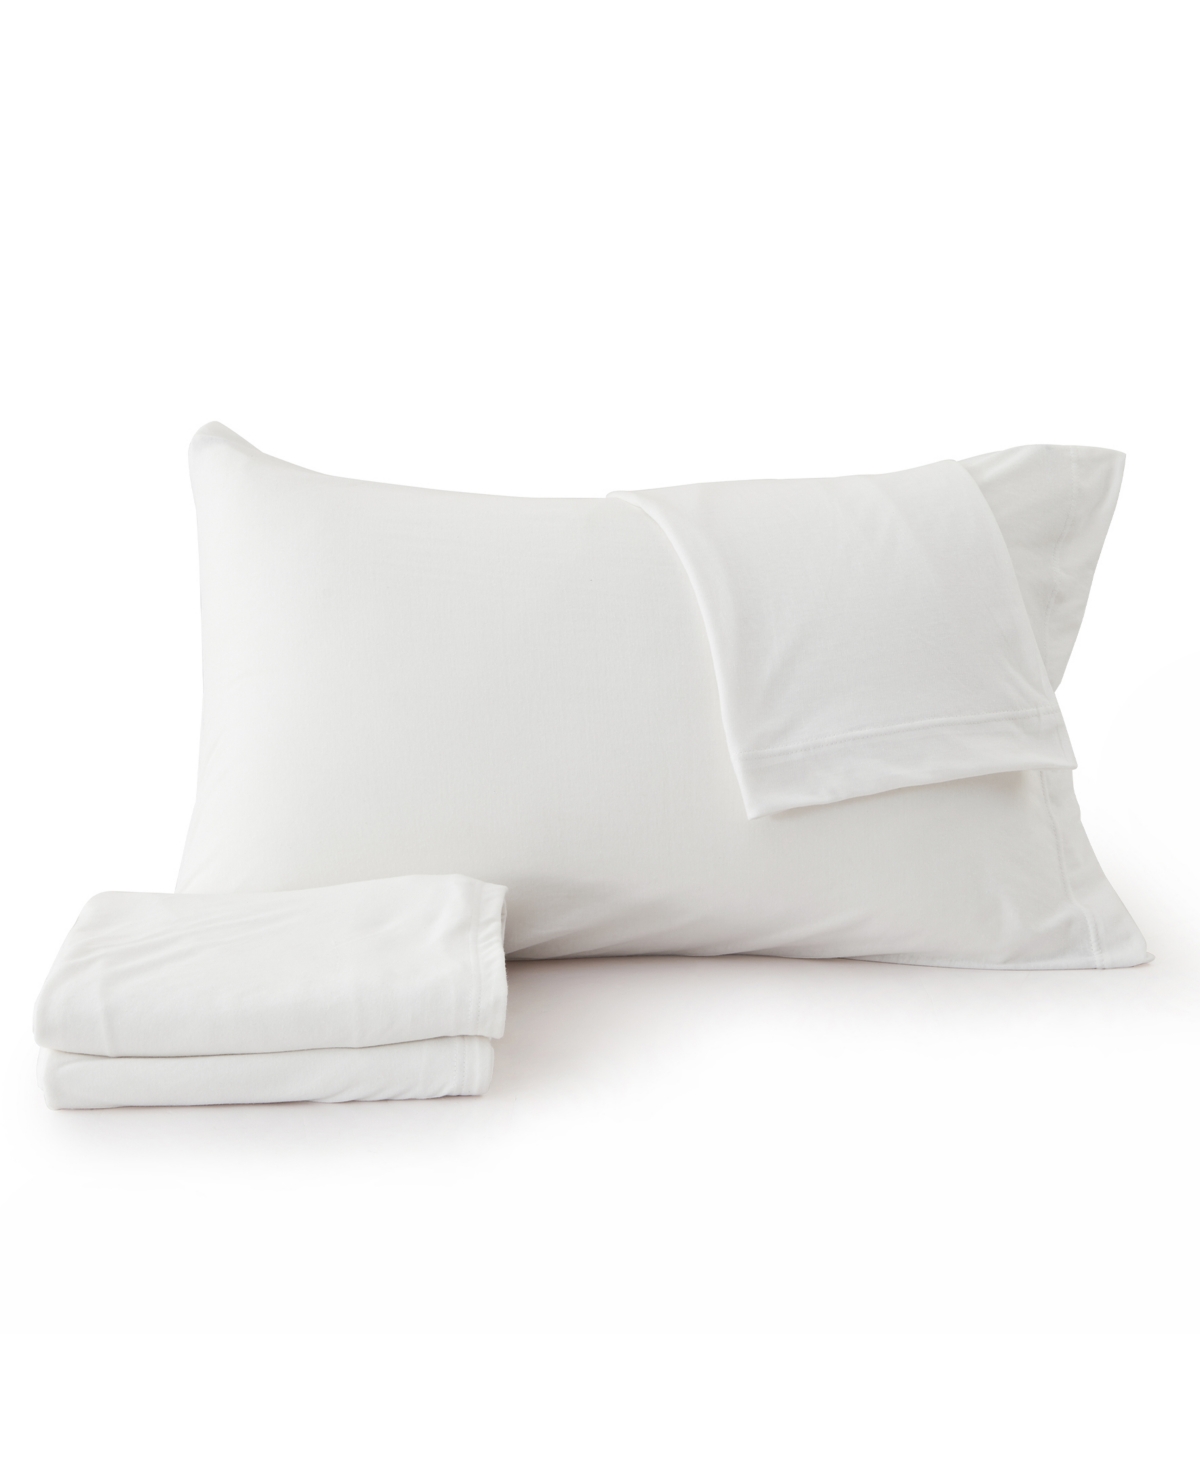 Premium Comforts Heathered Melange T-shirt Jersey Knit Cotton Blend 4 Piece Sheet Set, Twin Xl In Winter White